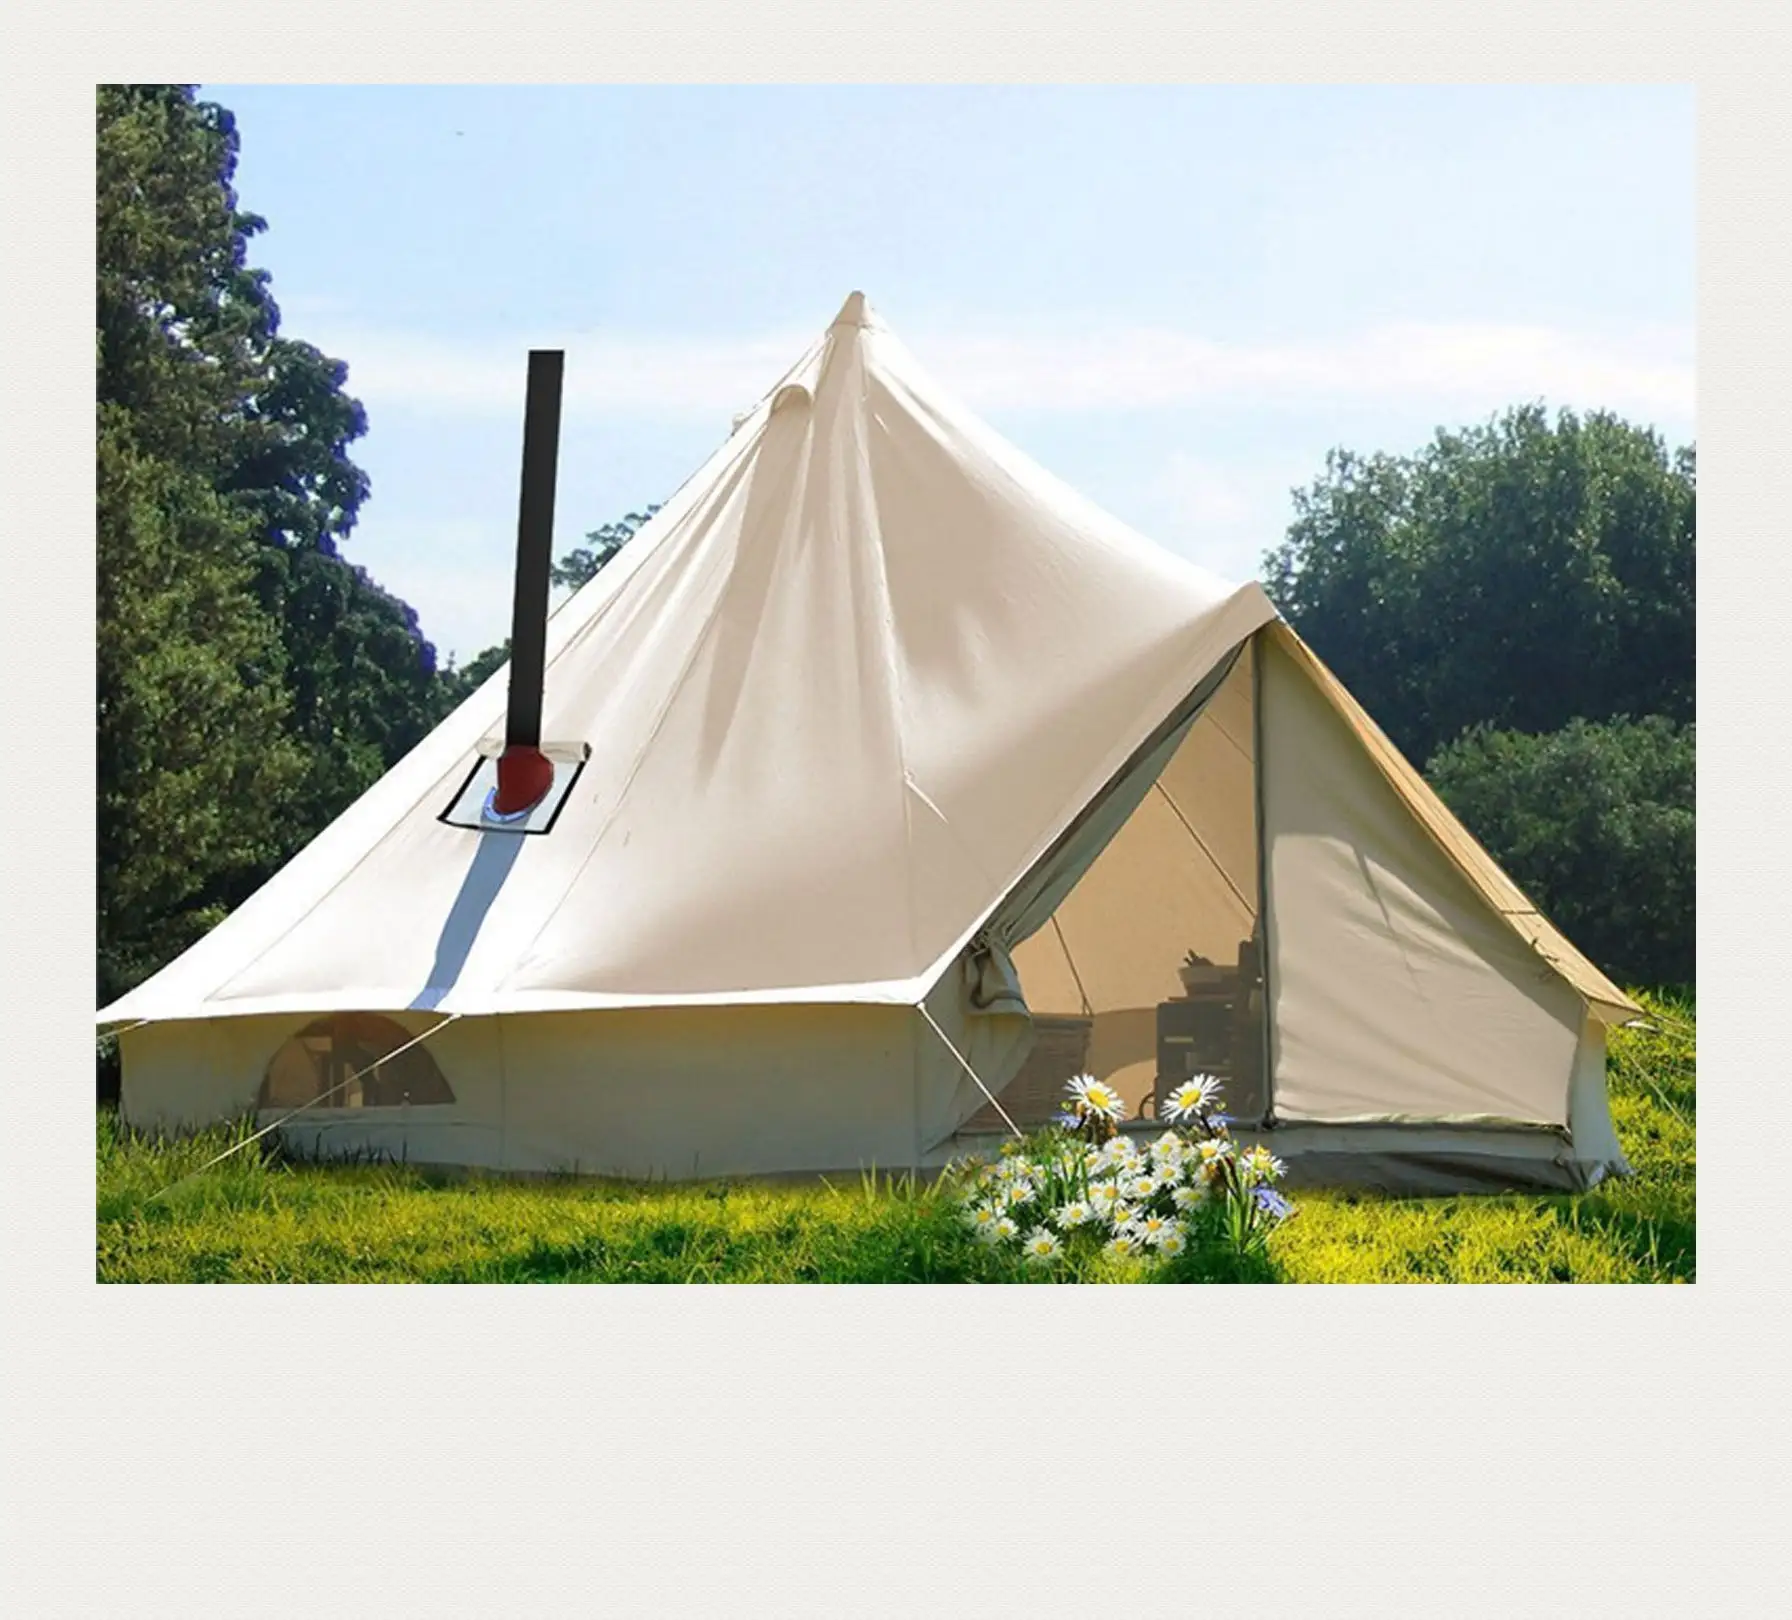 Sibley Tenda Kanvas 5M Katun UK, Tenda Kemah Kanvas Luar Ruangan